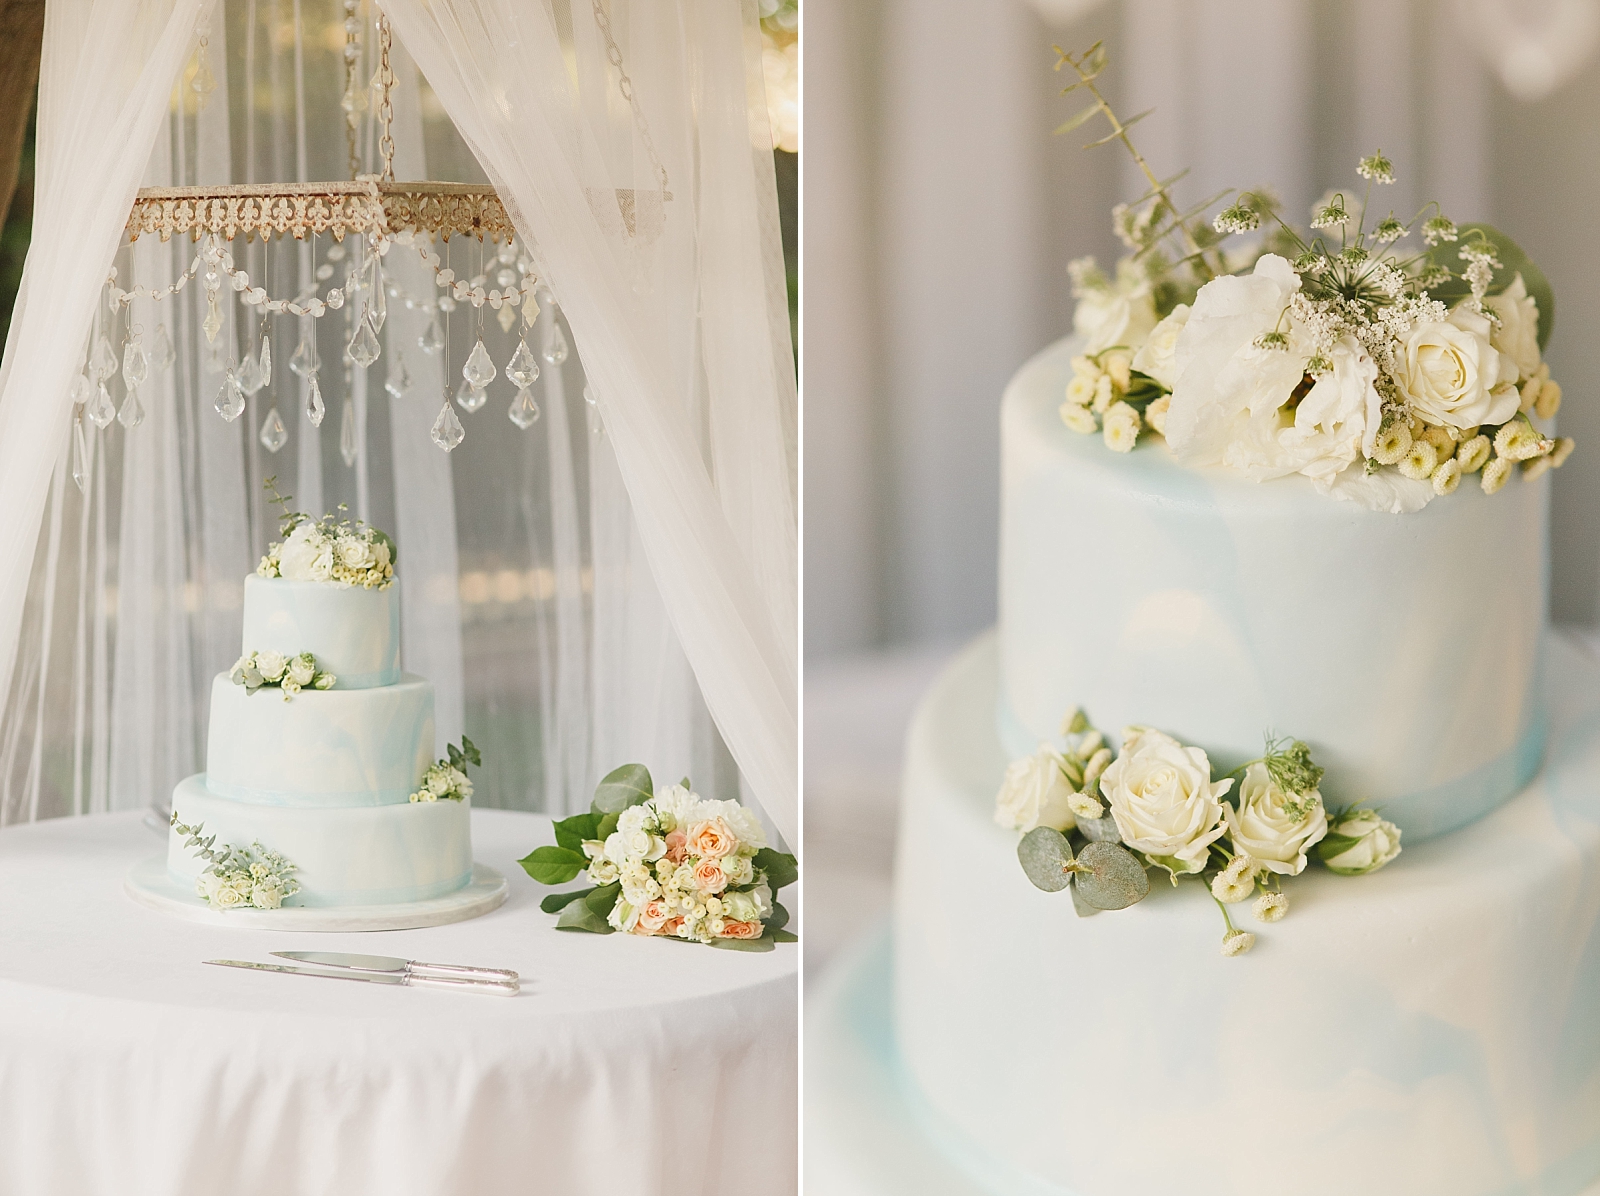 Garden themed wedding cake